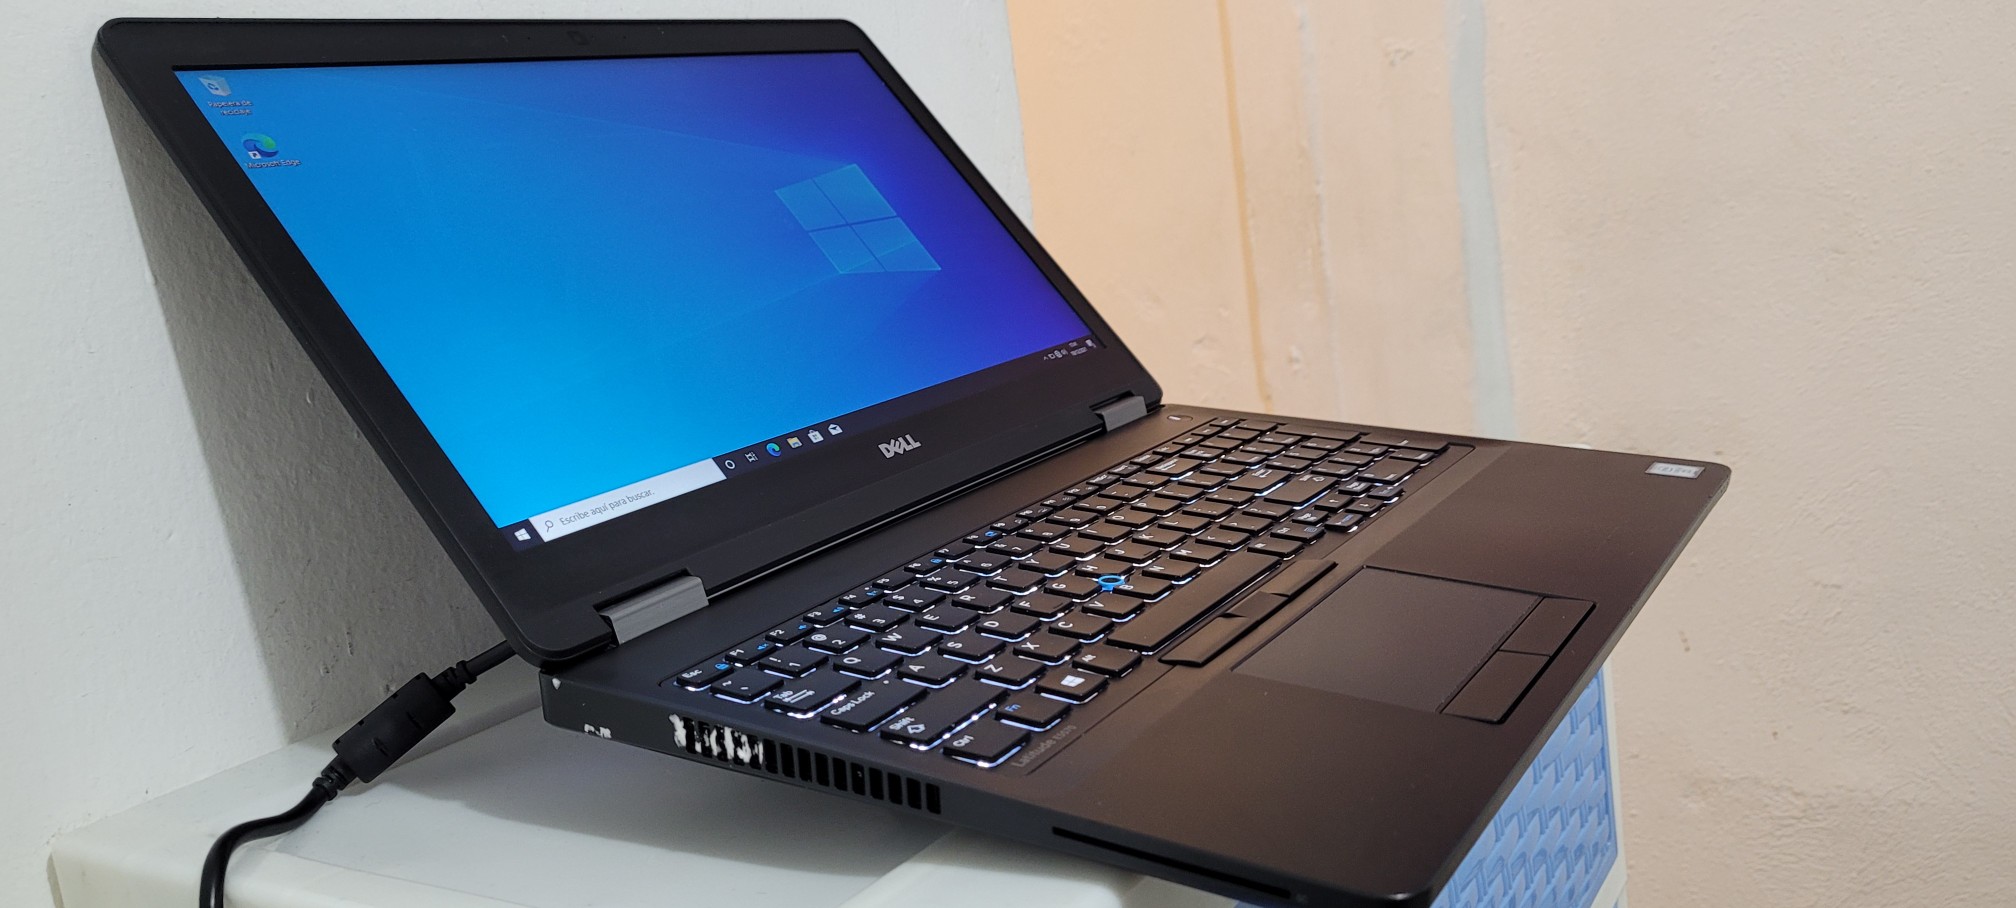 computadoras y laptops - Laptop Dell 5570 17 Pulg Core i7 6ta Ram 16gb ddr4 Disco 256gb SSD Video 8gb 1